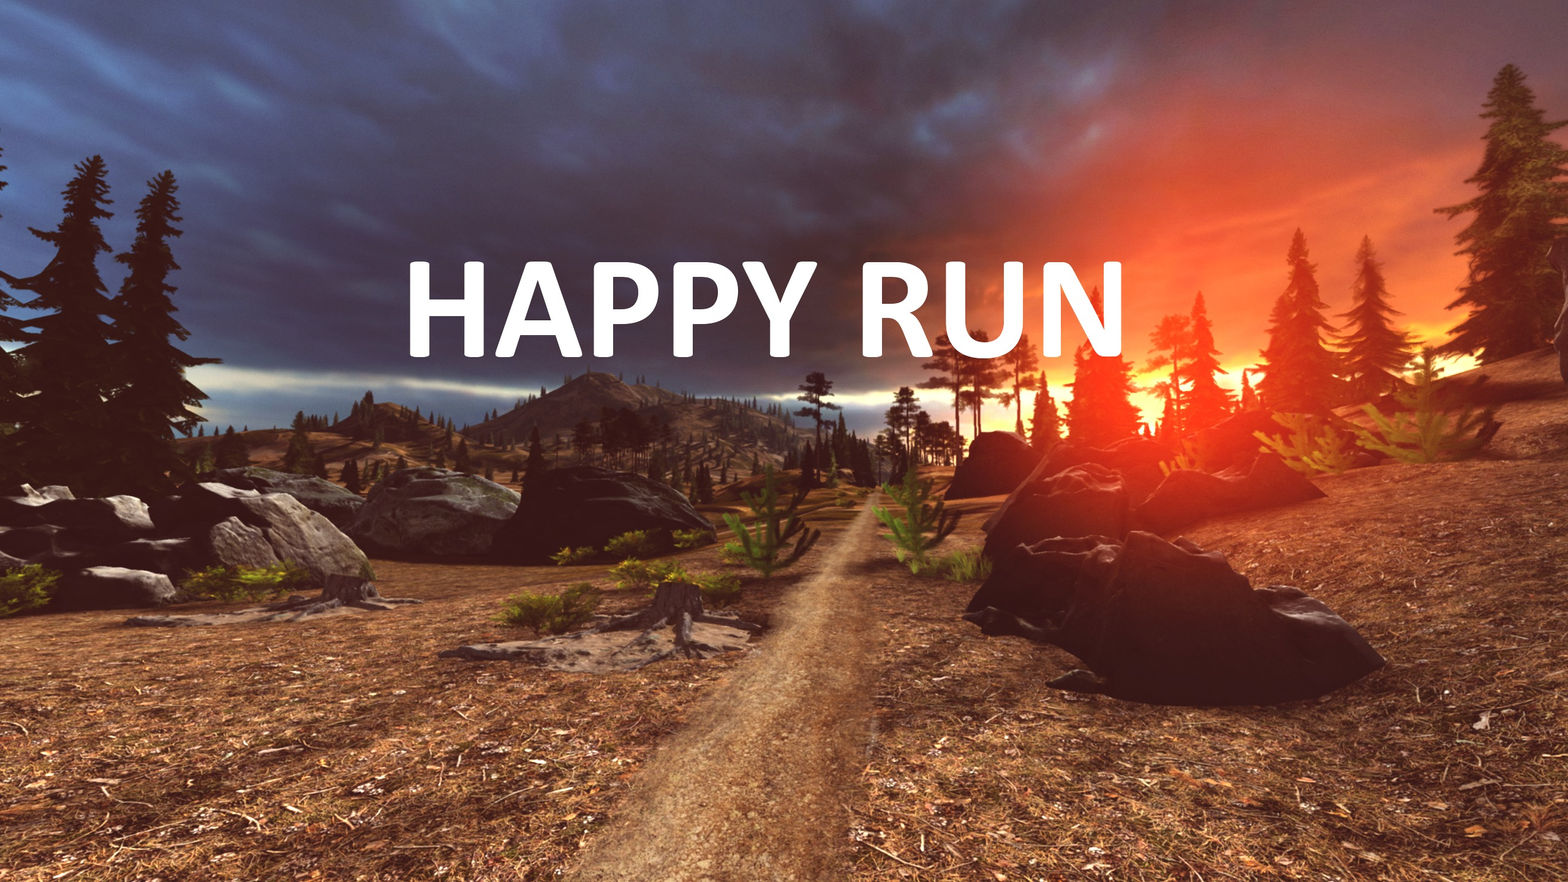 Happy Run!